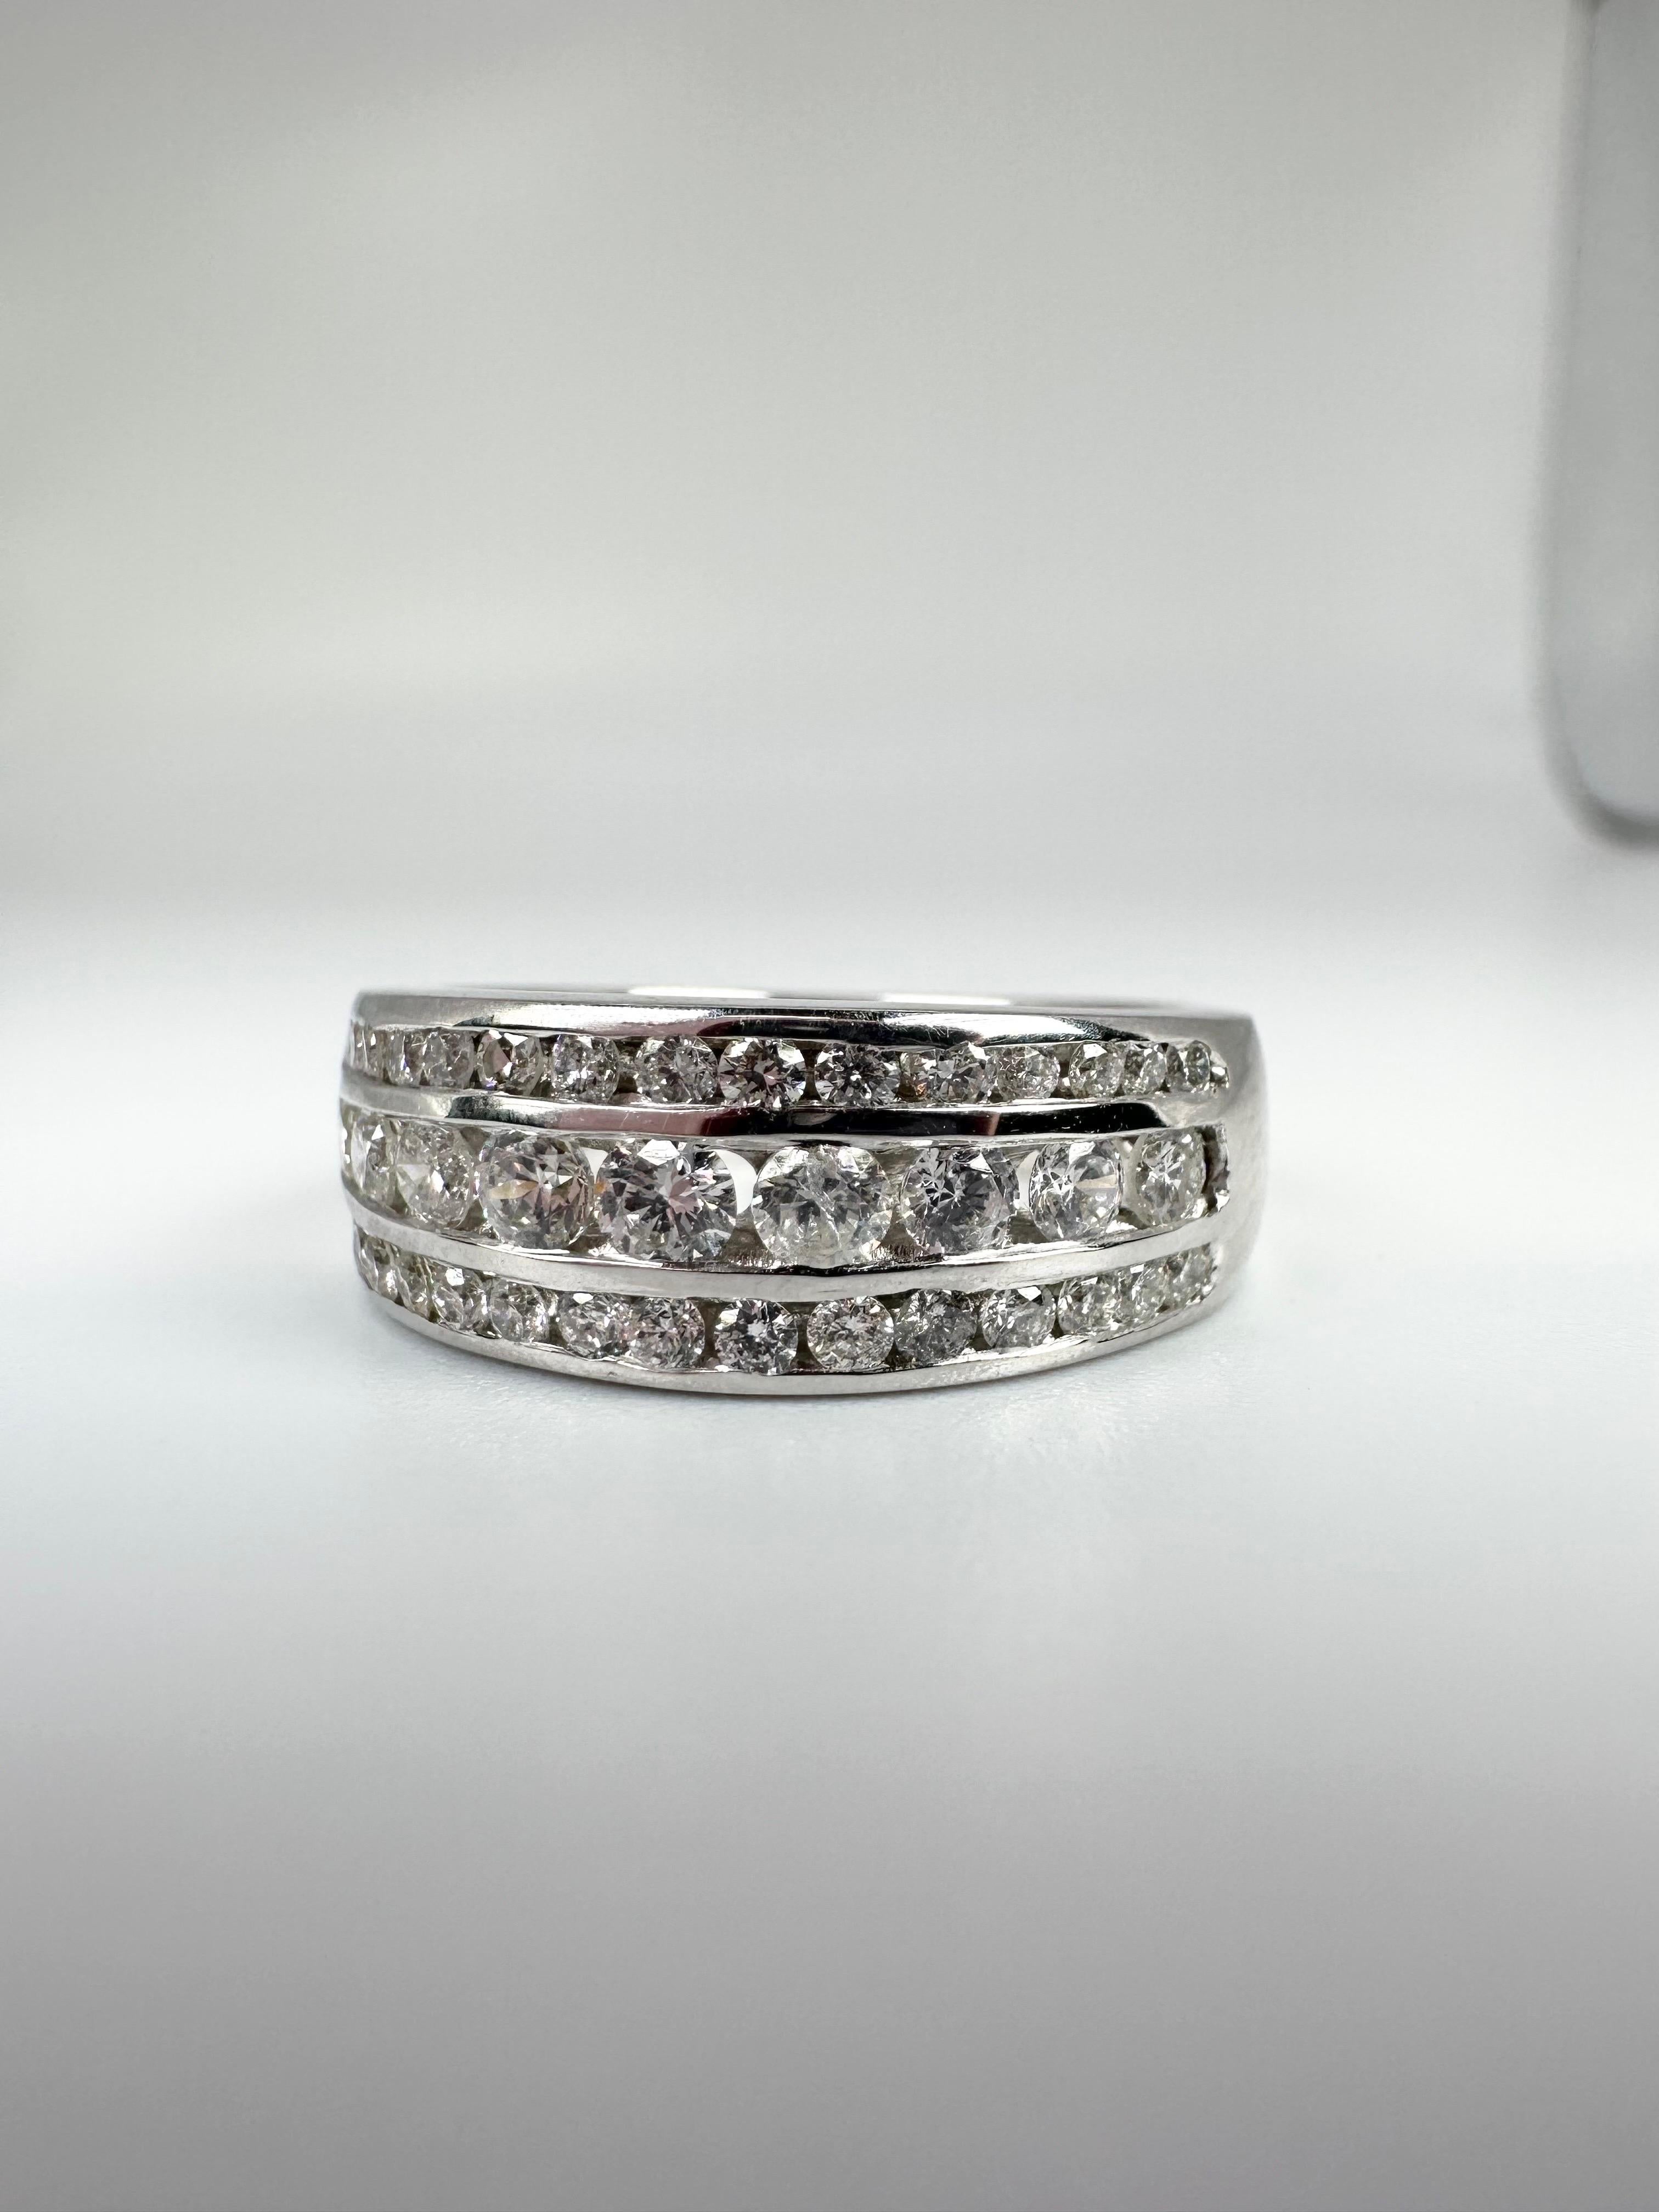 Diamond Wedding Band Wide Diamond Ring 14 Karat White Gold 0.75 Carat In New Condition For Sale In Jupiter, FL